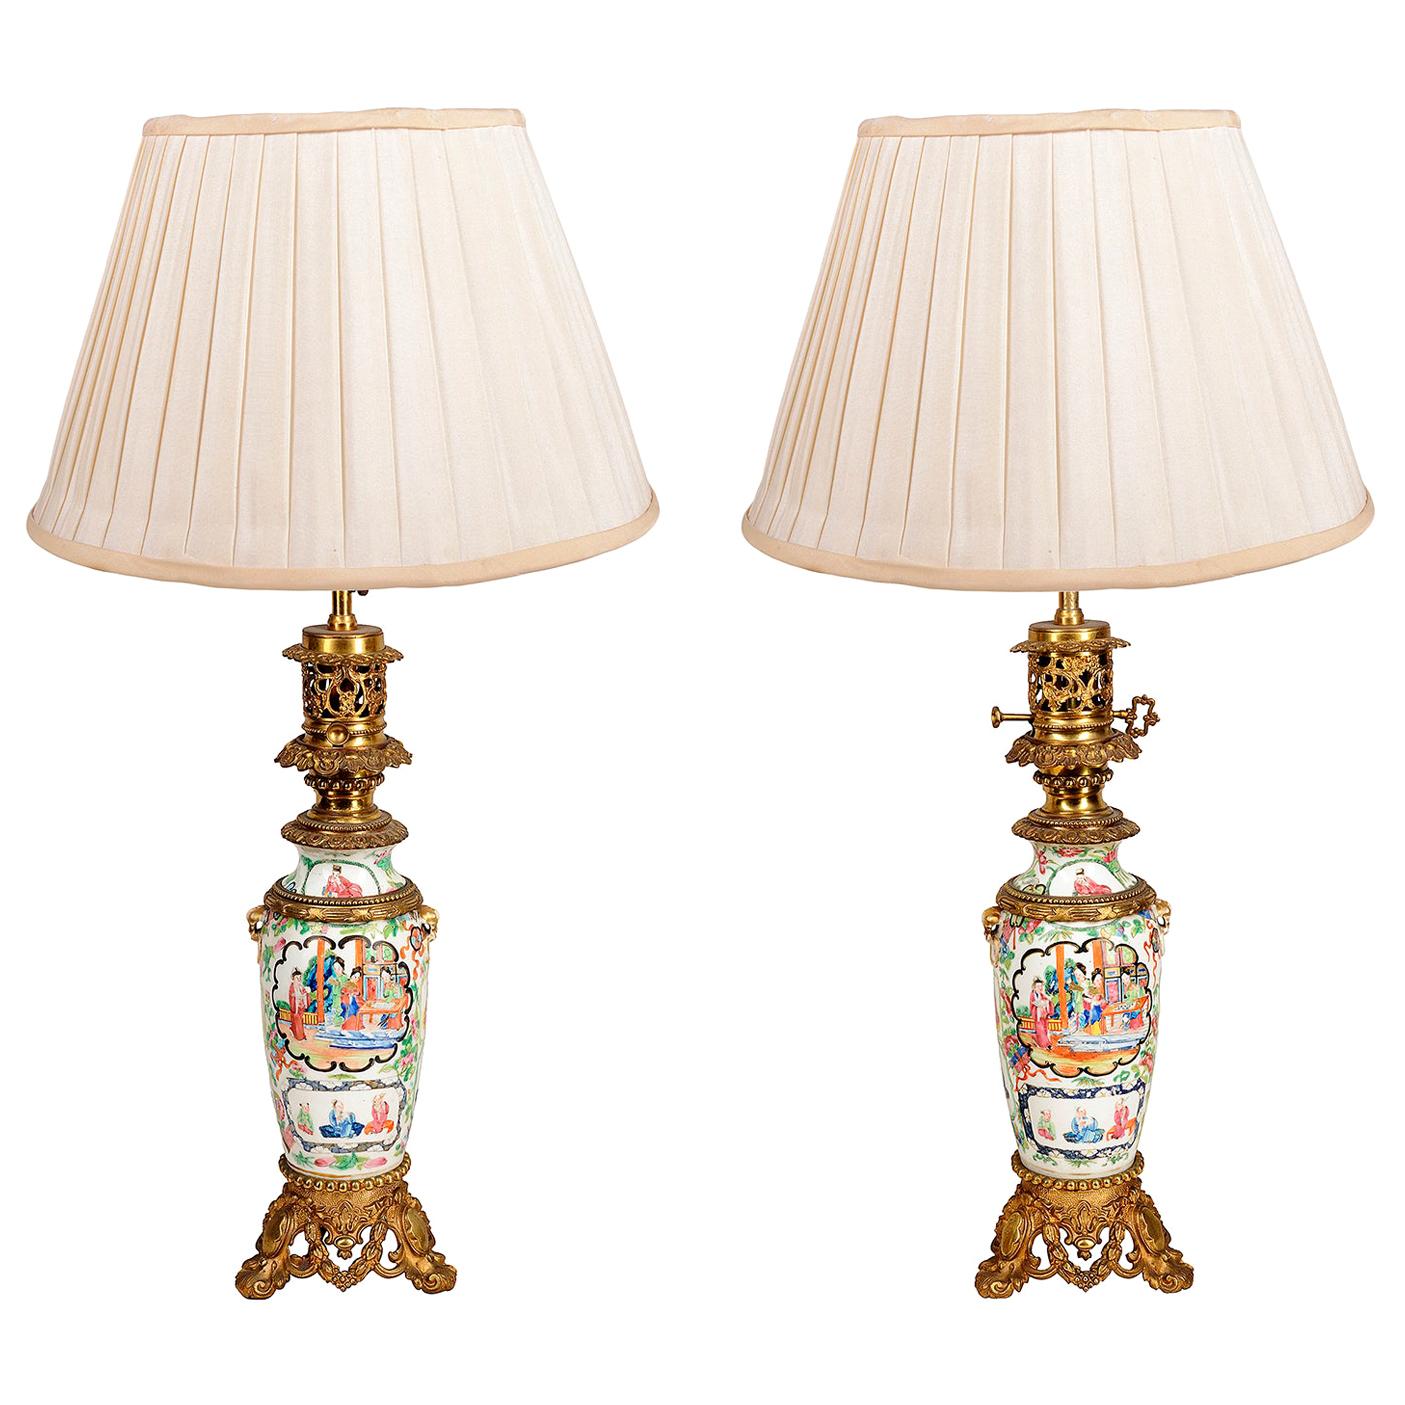 Pair of 19th Century Rose Medallion Vases / Lamps